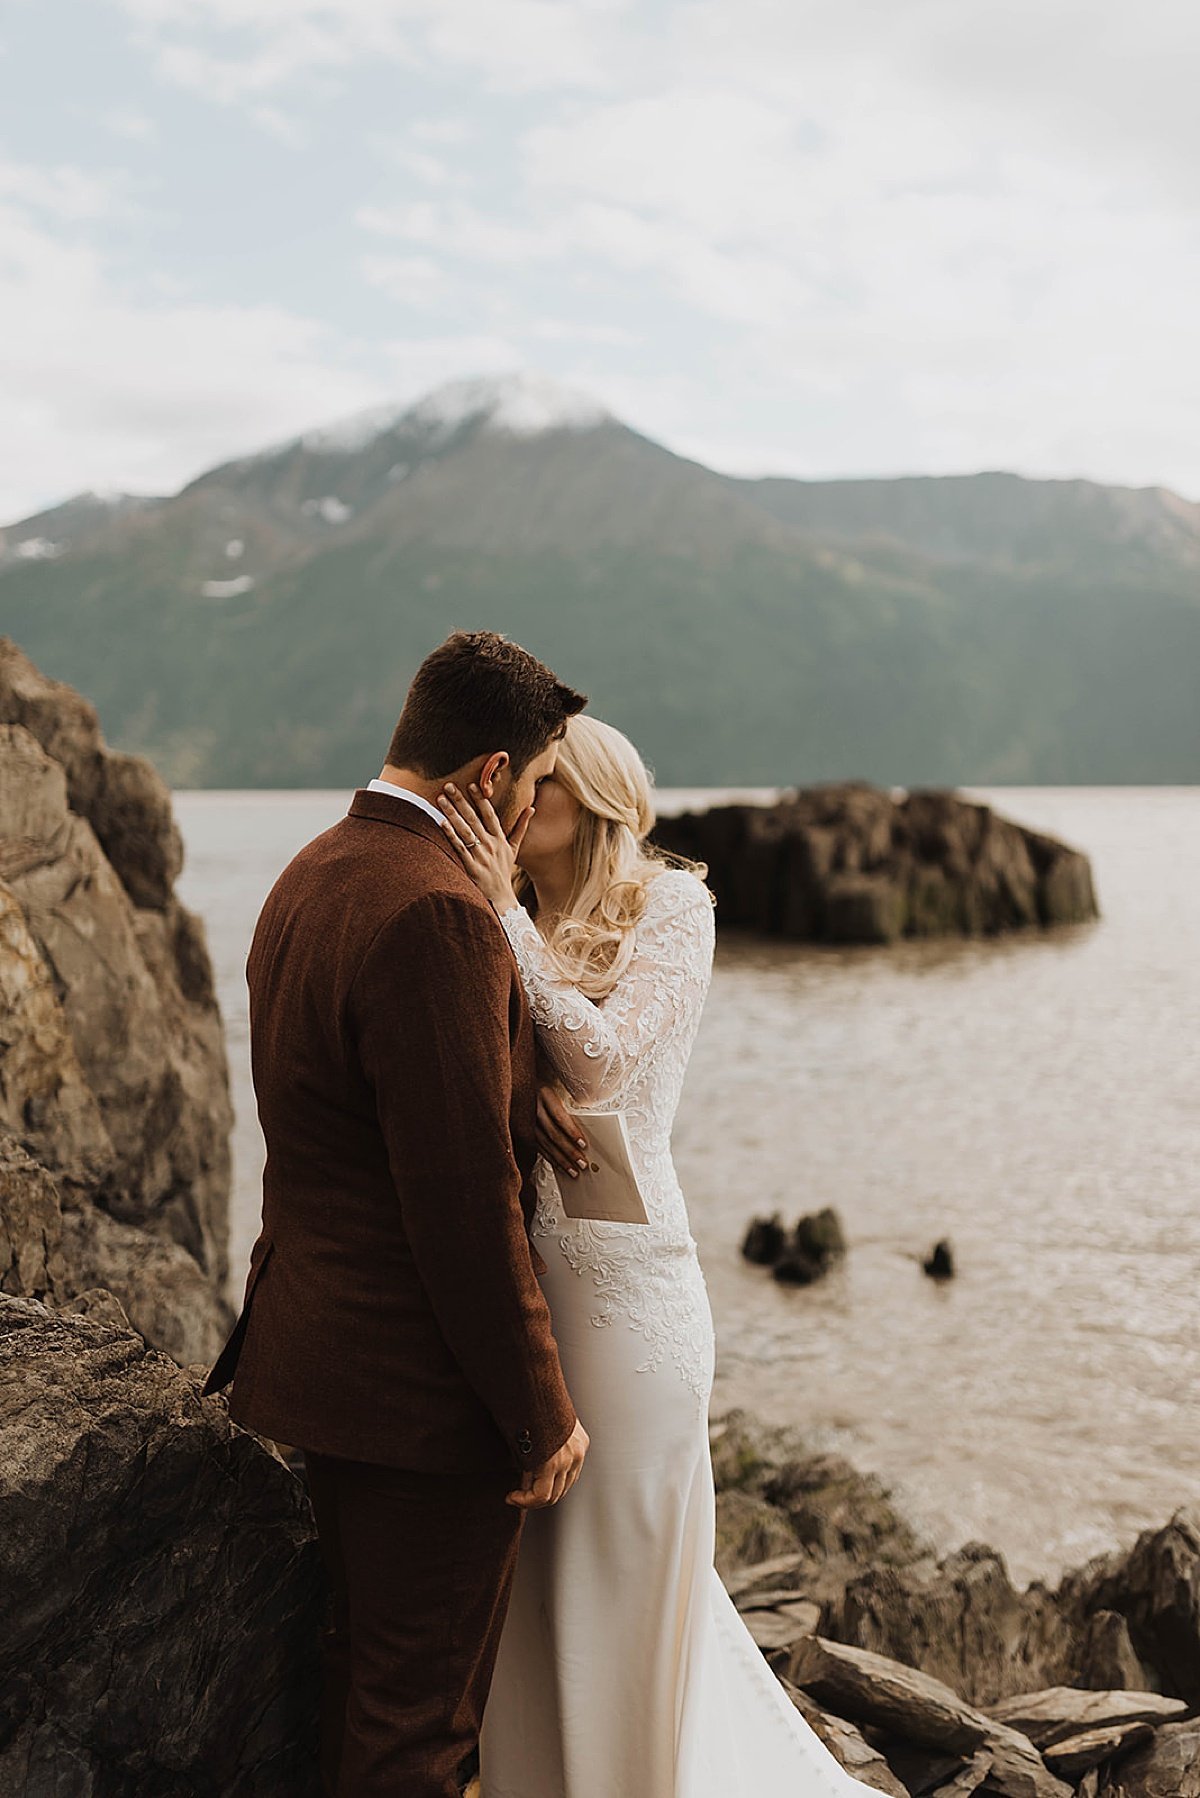  newlywed bride and groom kiss at mountain lake in moody glacier creek wedding 